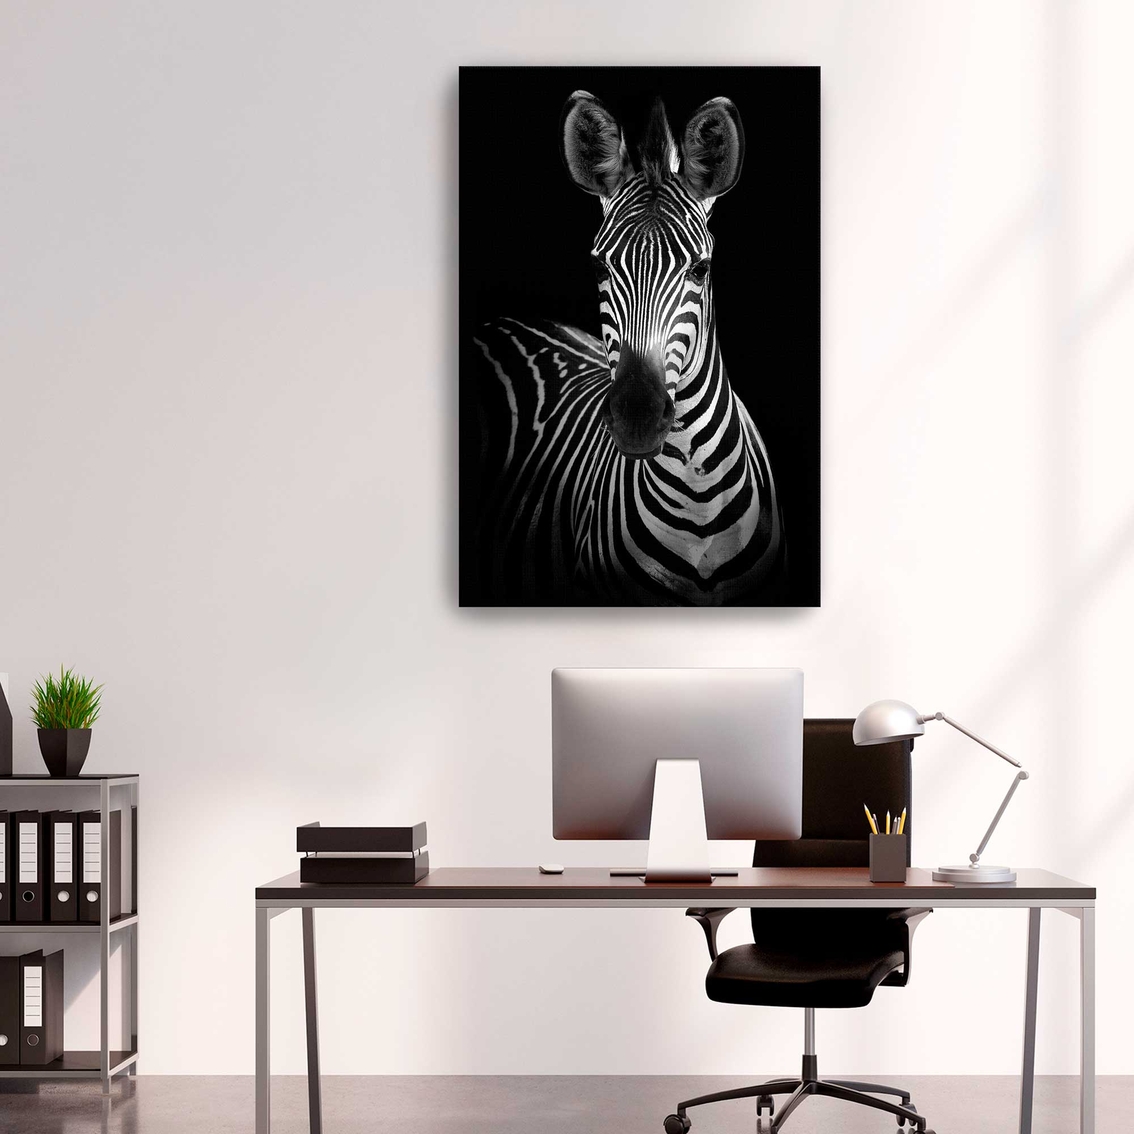 Inkstry Zebra Canvas Wrapped Giclee Art - Image 3 of 3